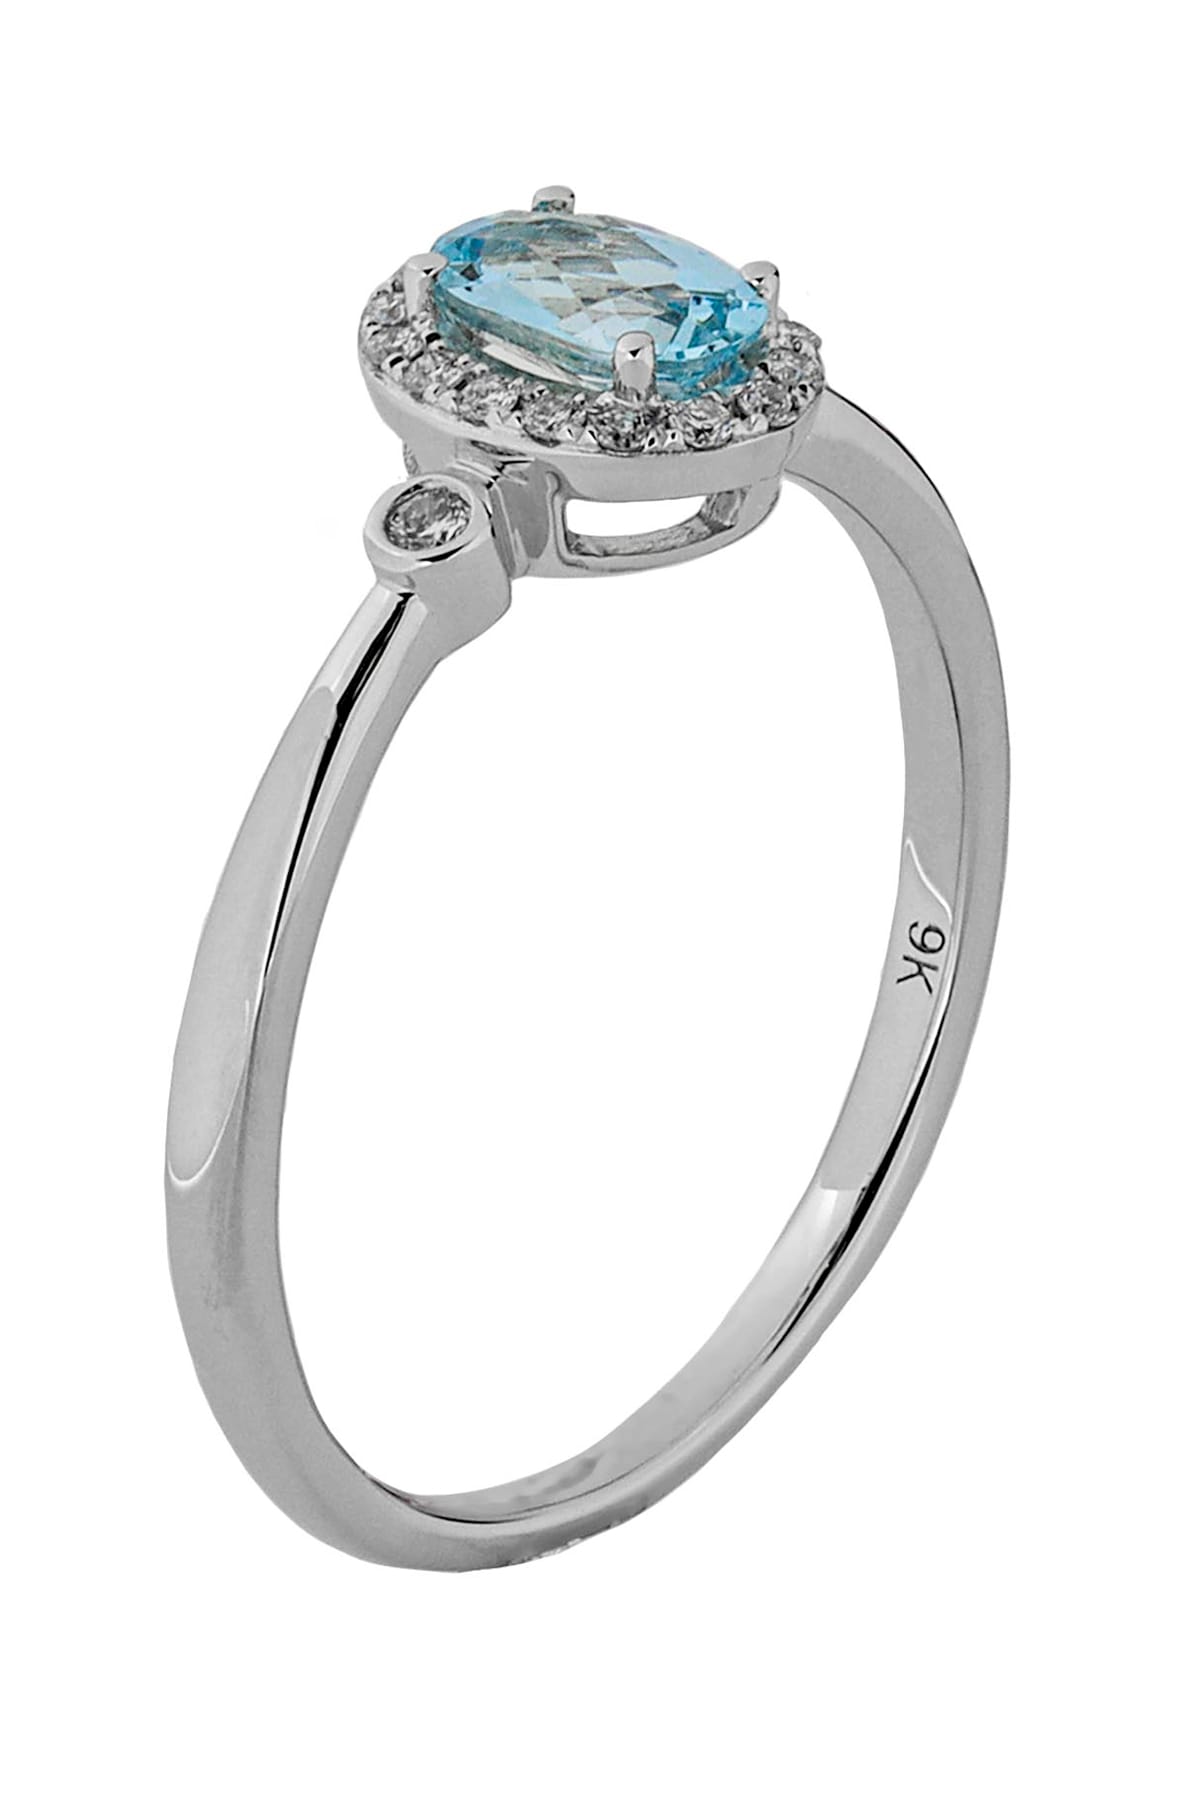 9 Carat Gold Aquamarine and Diamond Halo Ring available at LeGassick Diamonds and Jewellery Gold Coast, Australia.